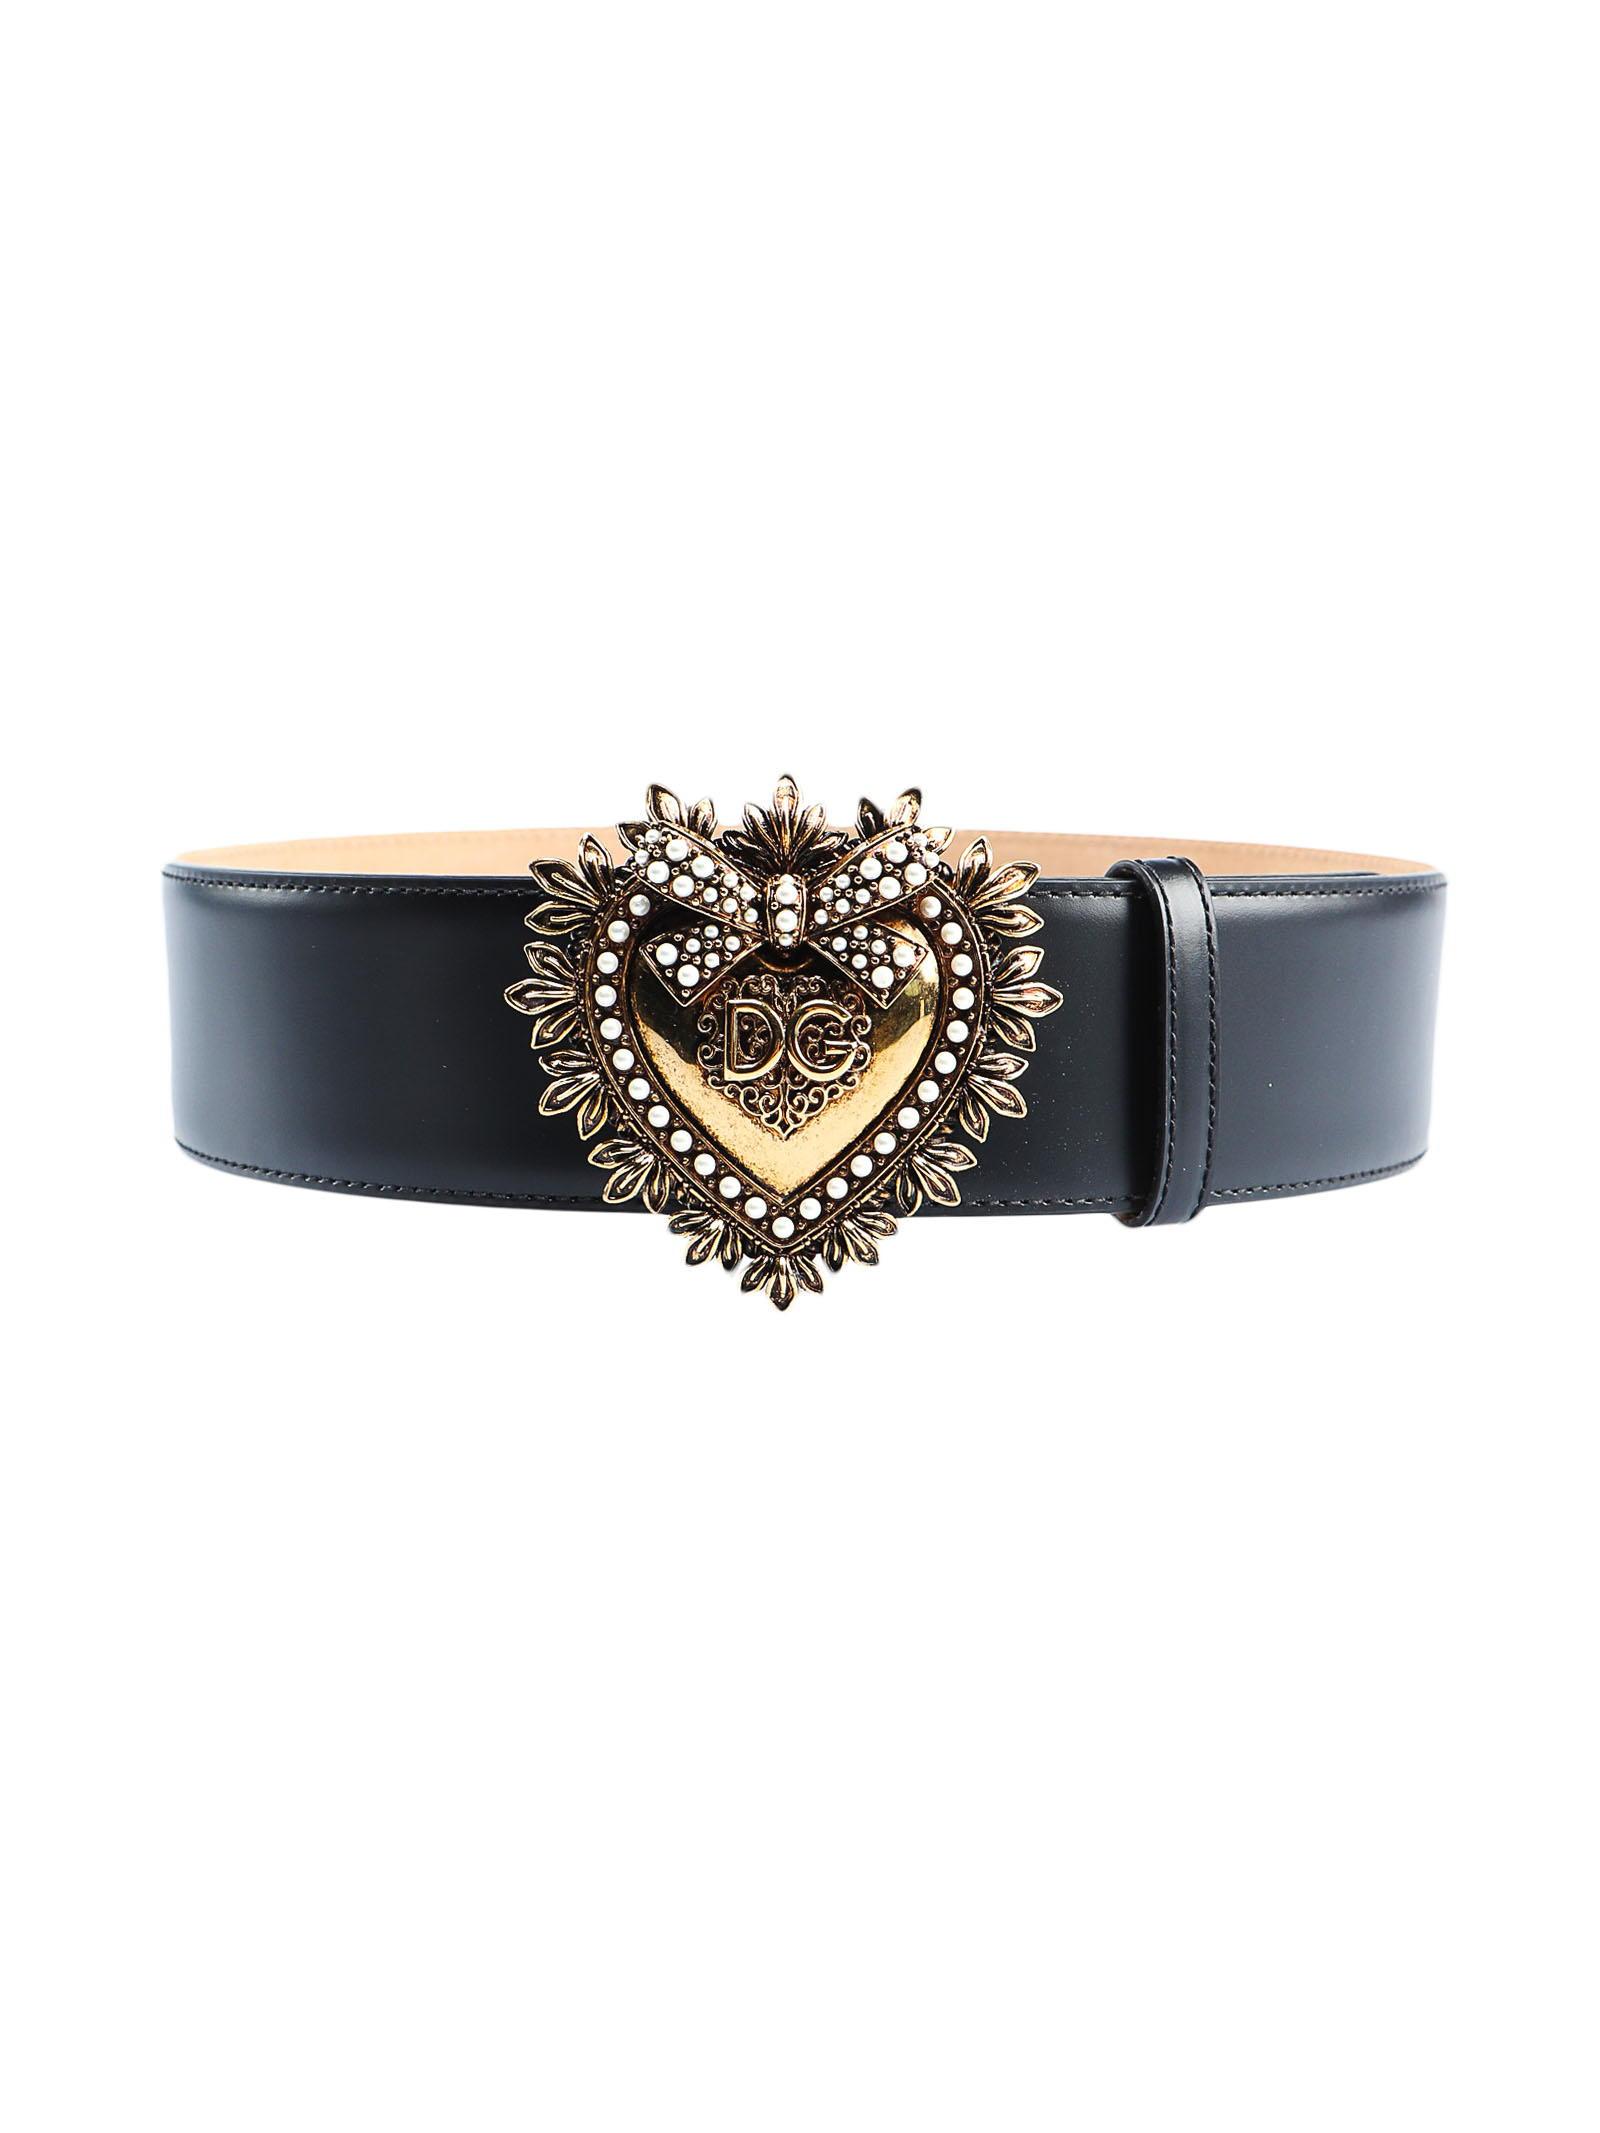 Dolce & Gabbana Leather Devotion Belt - Lyst